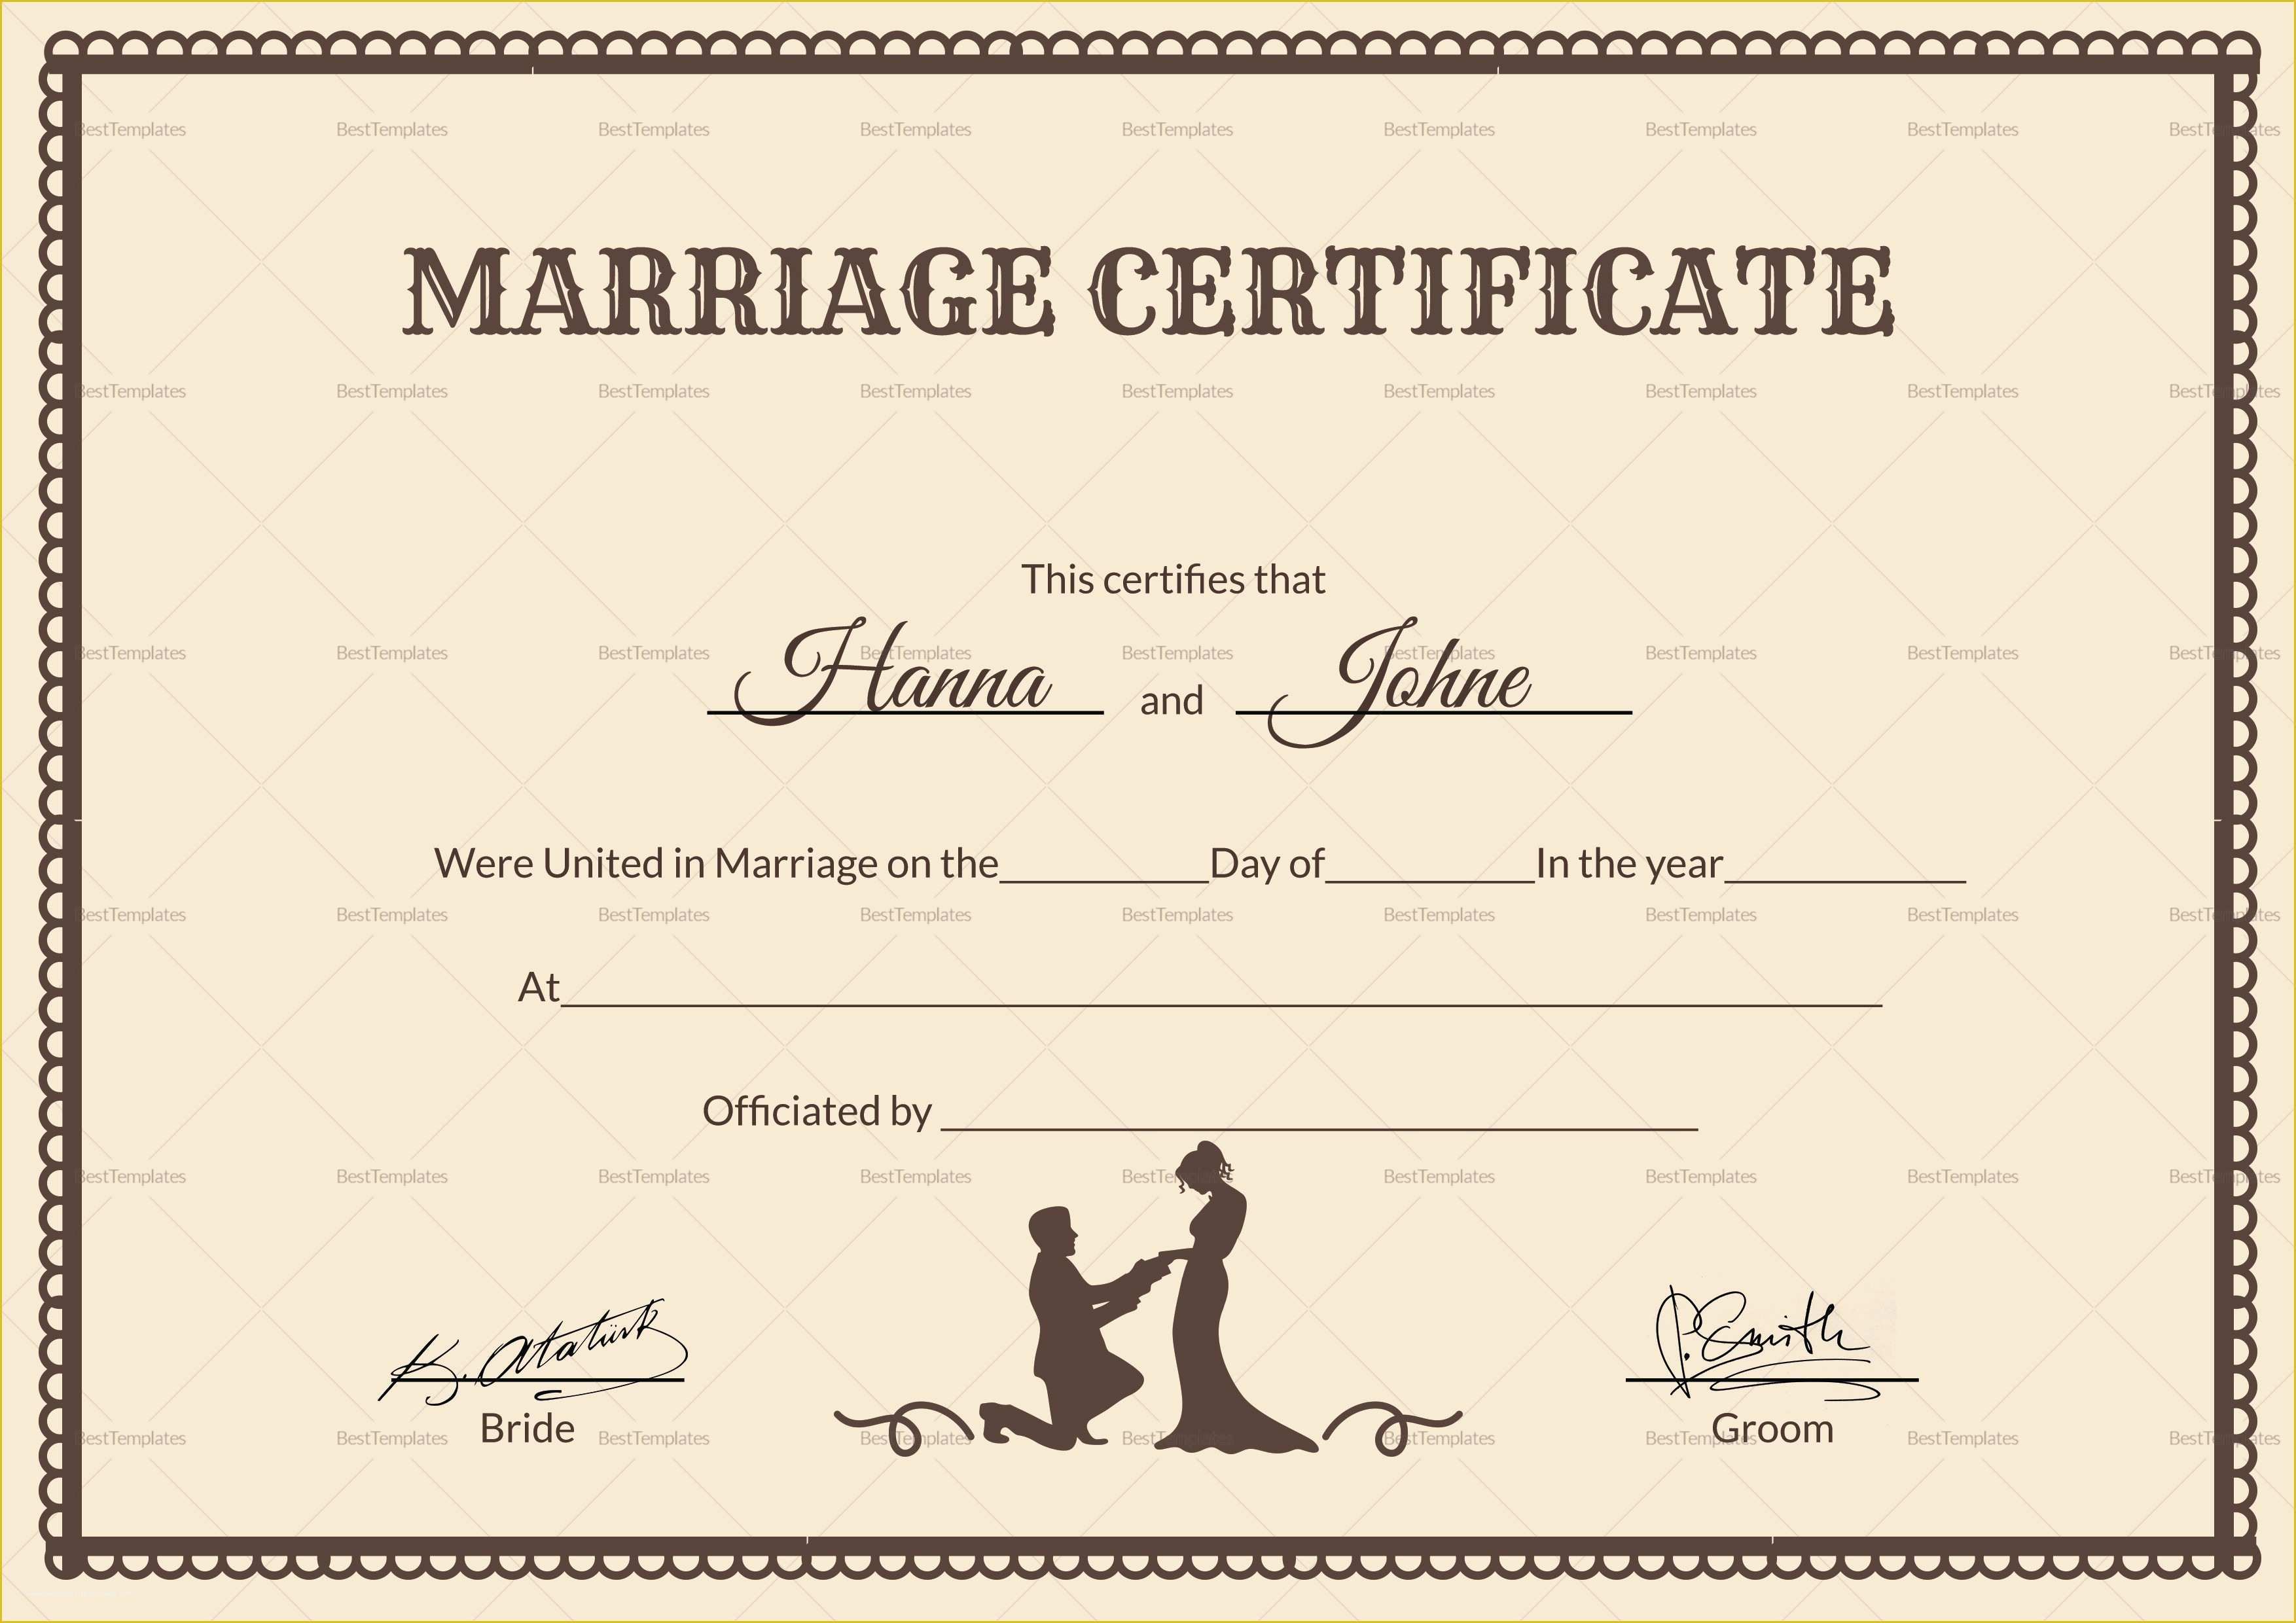 Free Marriage Certificate Template Microsoft Word Of Marriage Certificate Template